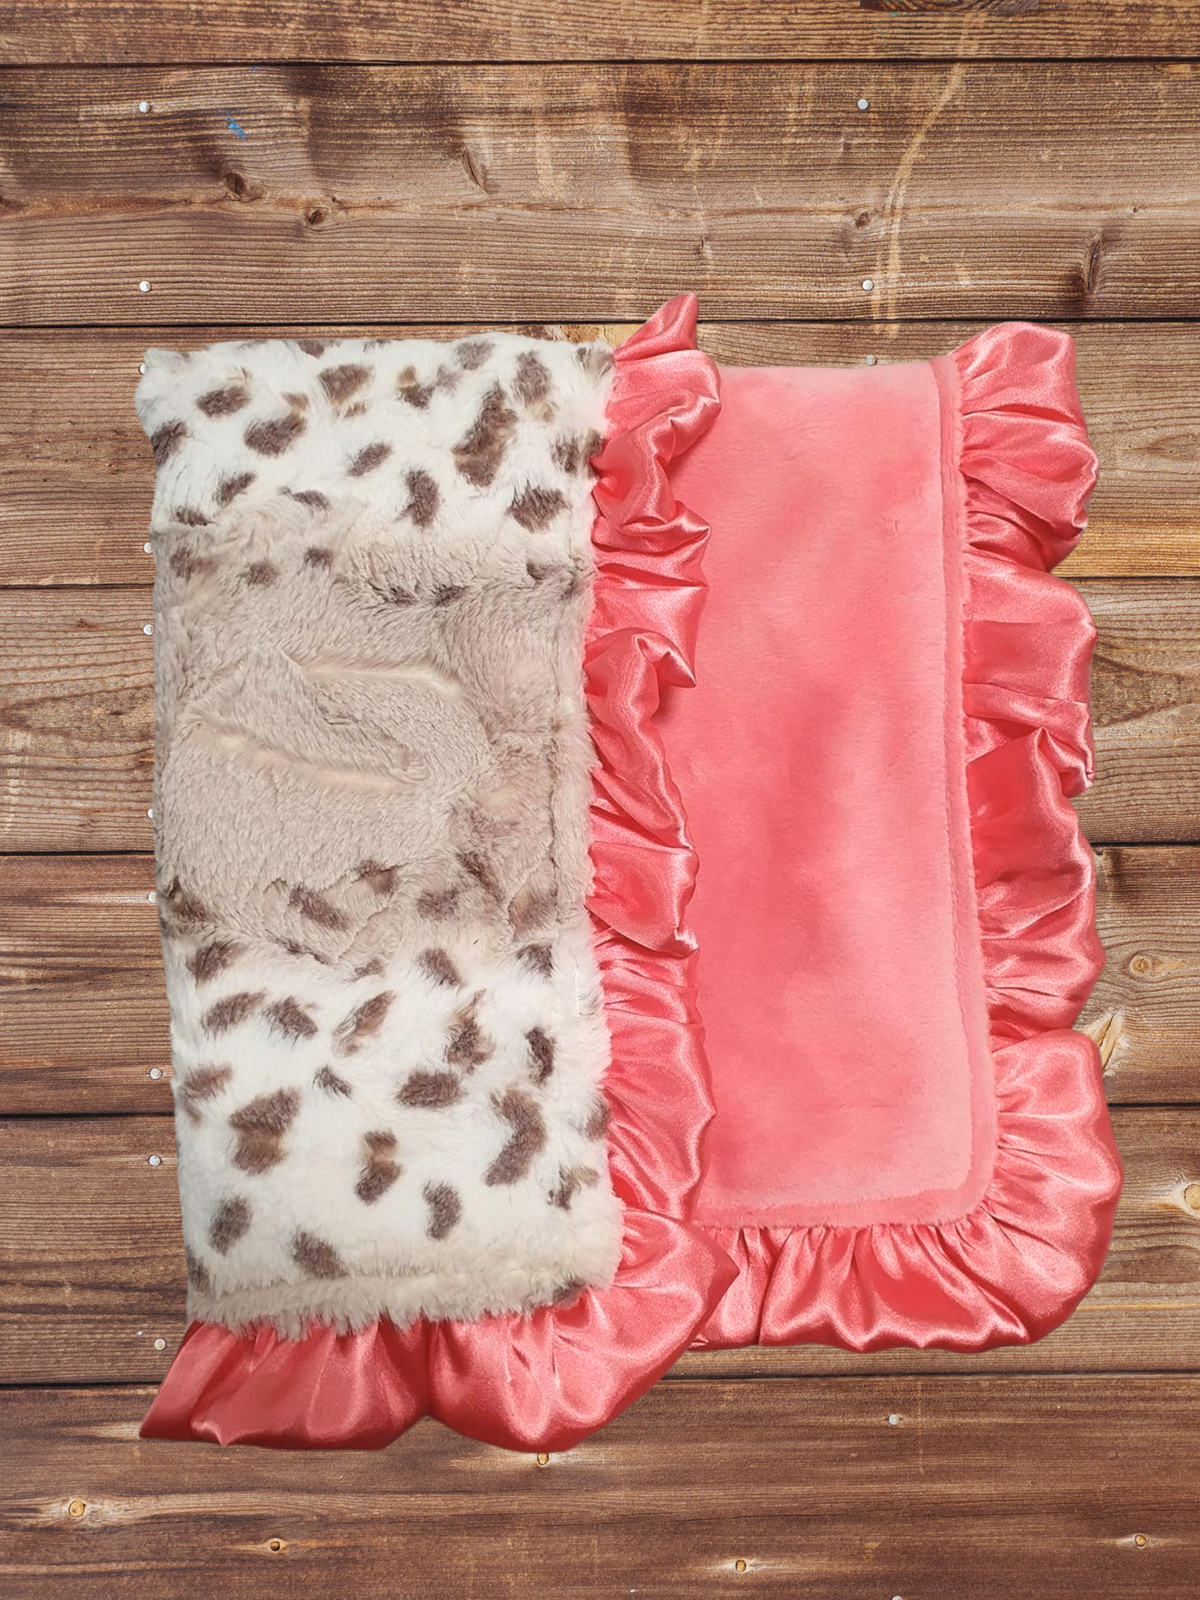 Baby Ruffle Blanket - Lynx Minky and Coral Minky Blanket - DBC Baby Bedding Co 